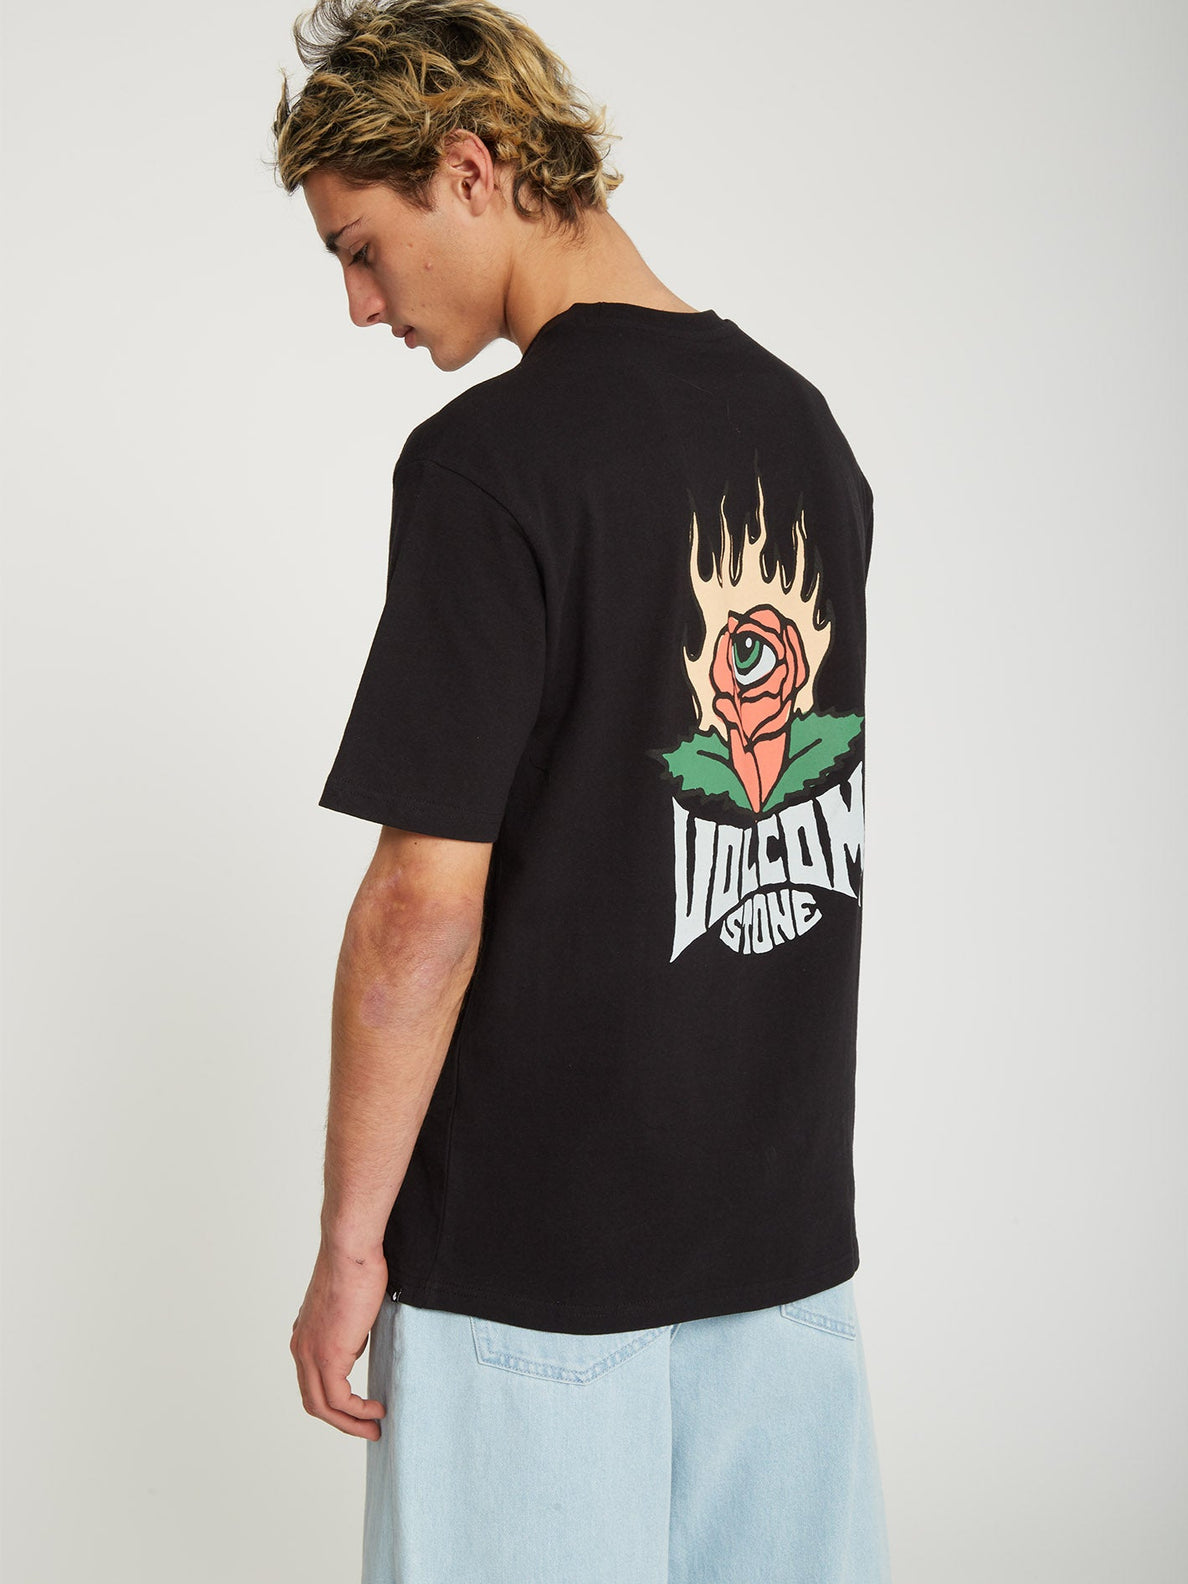 Roseye T-shirt - BLACK (A4312212_BLK) [150]